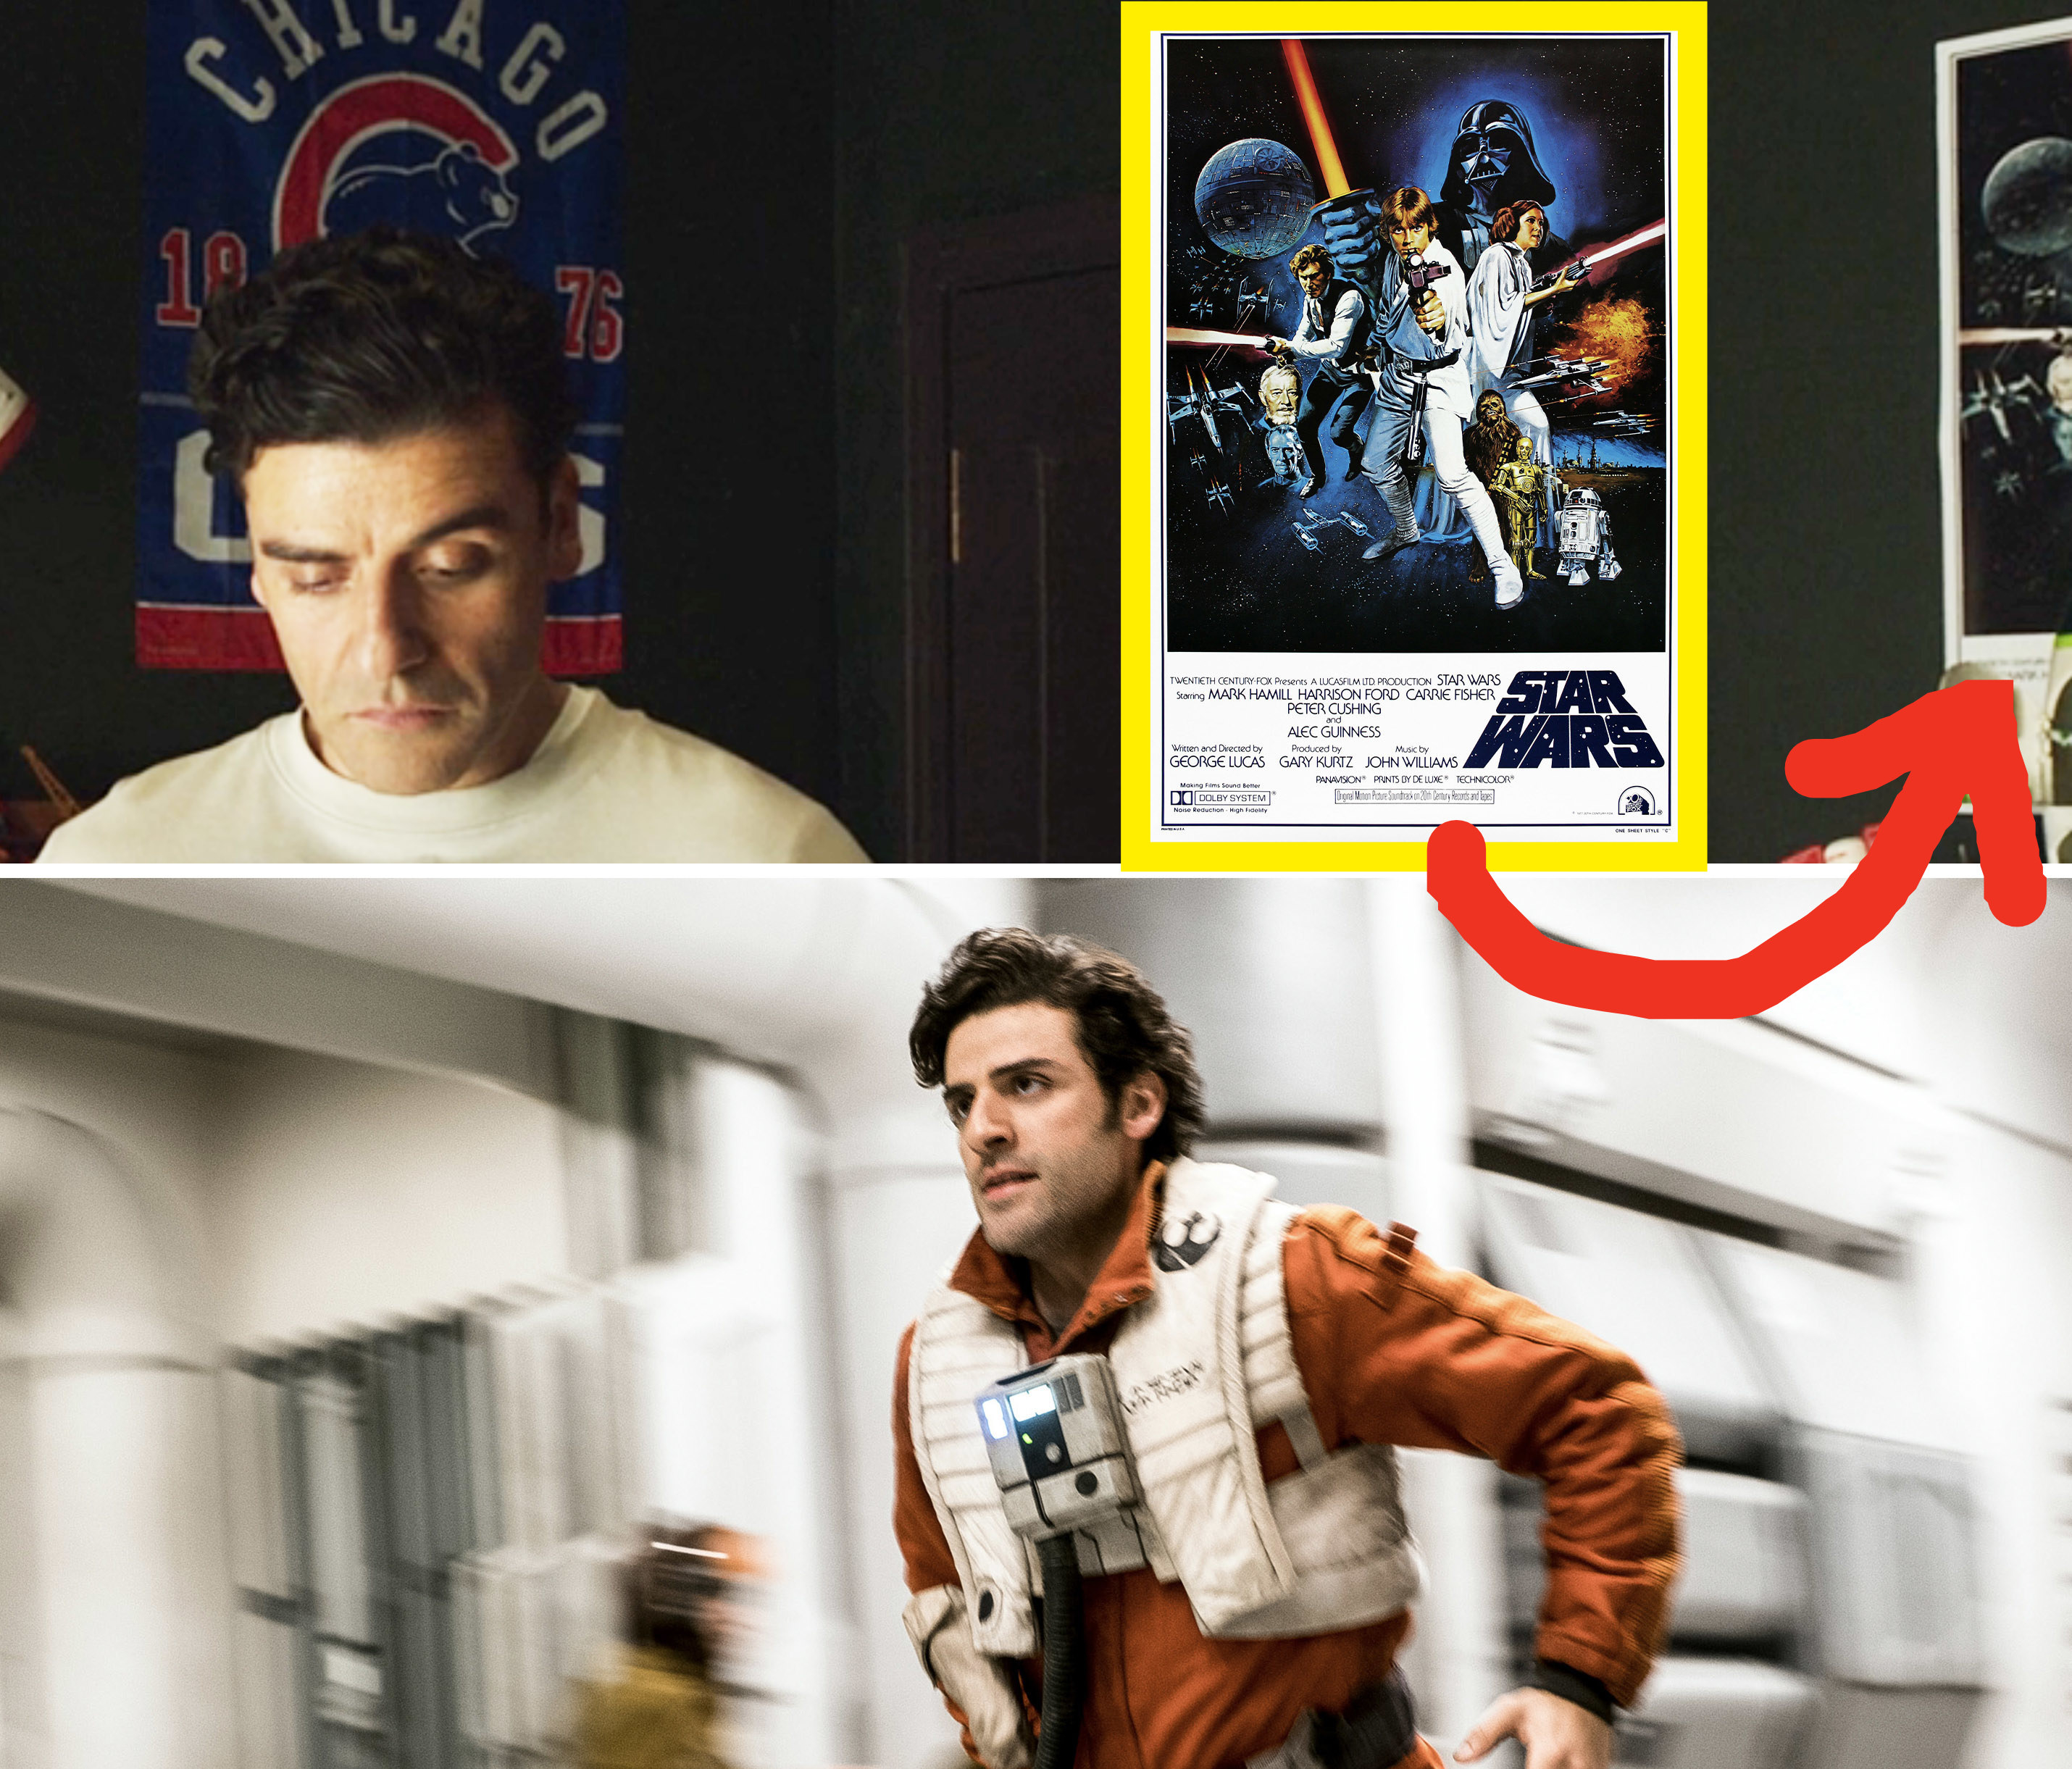 A screenshot circling the Star Wars posted above Oscar Isaac playing Poe Dameron